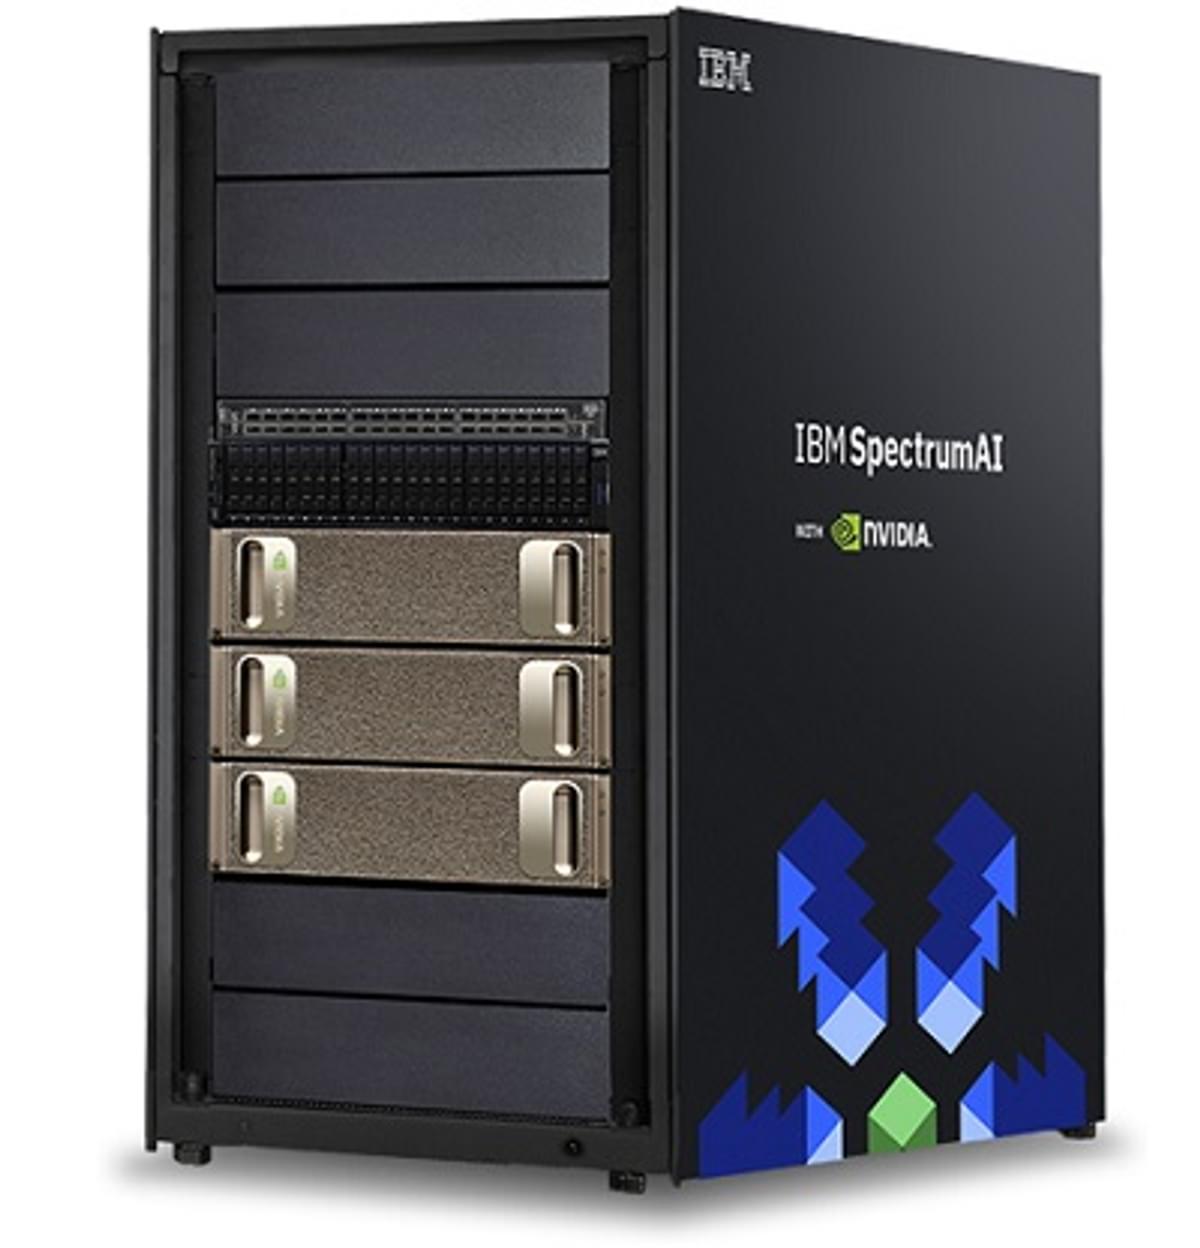 IBM introduceert SpectrumAI met NVIDIA DG X image